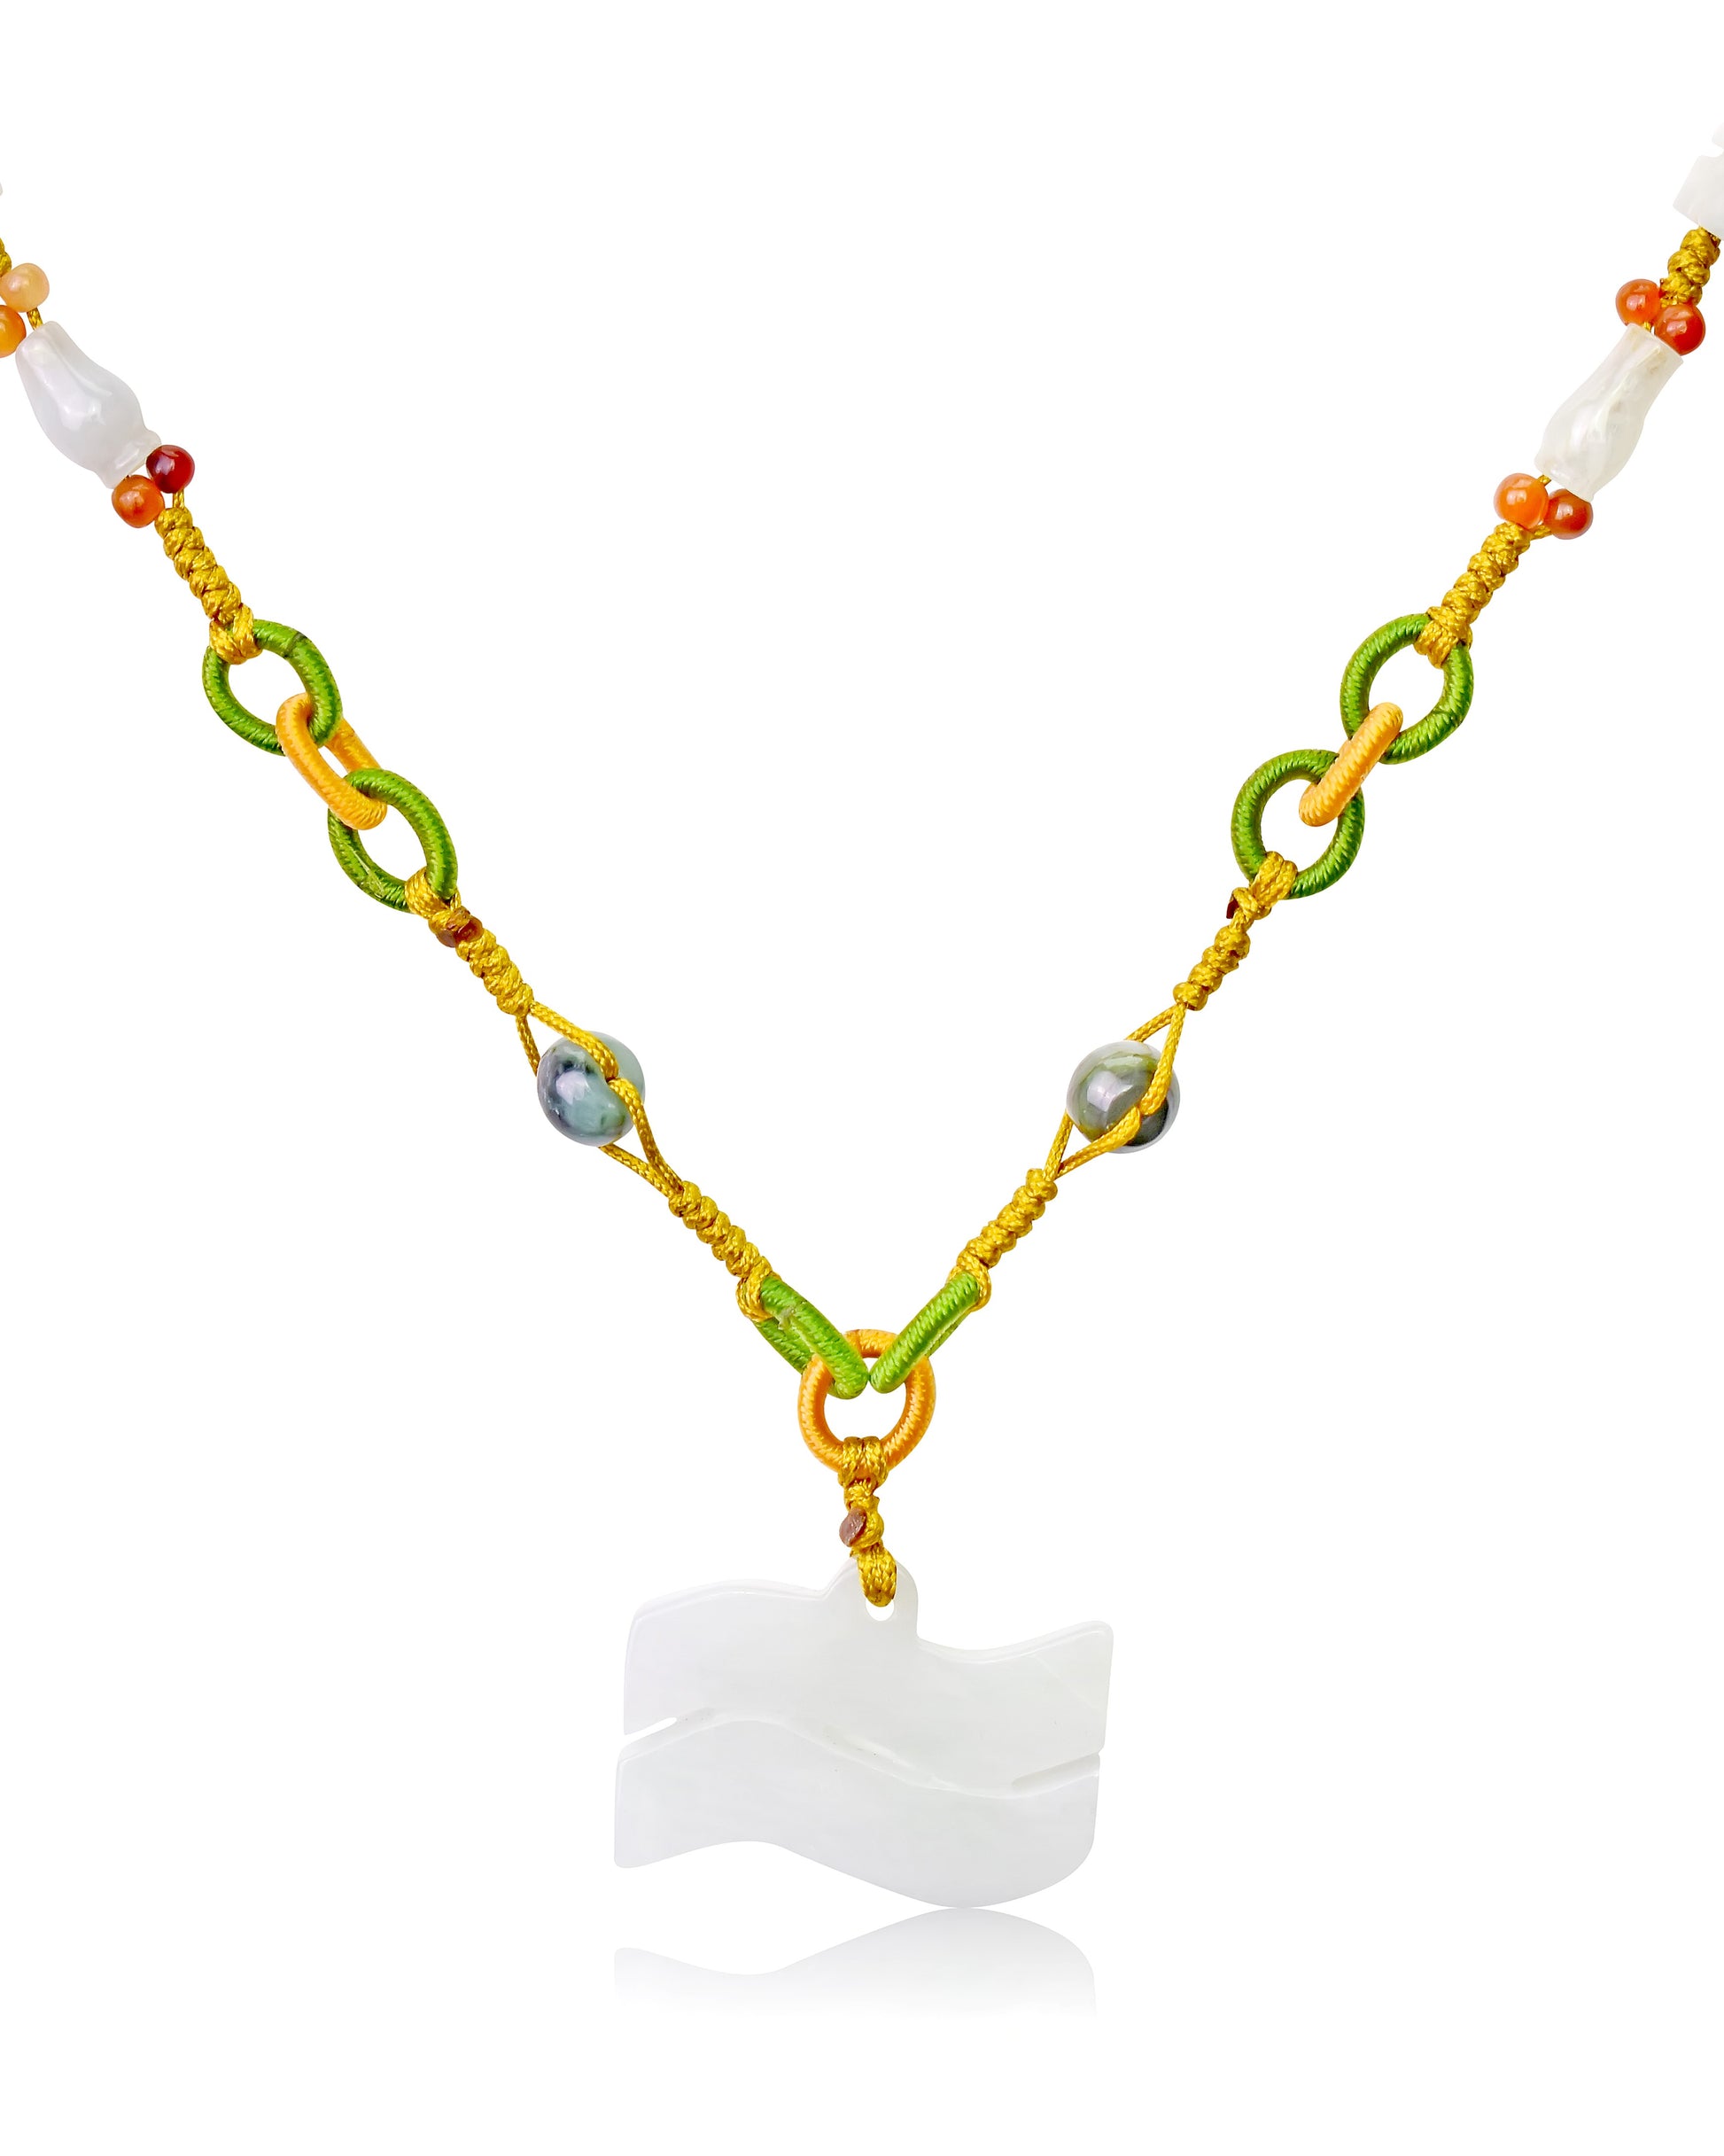 Aquarius Astrology Handmade Jade Necklace Single Pendant with Yellow Cord